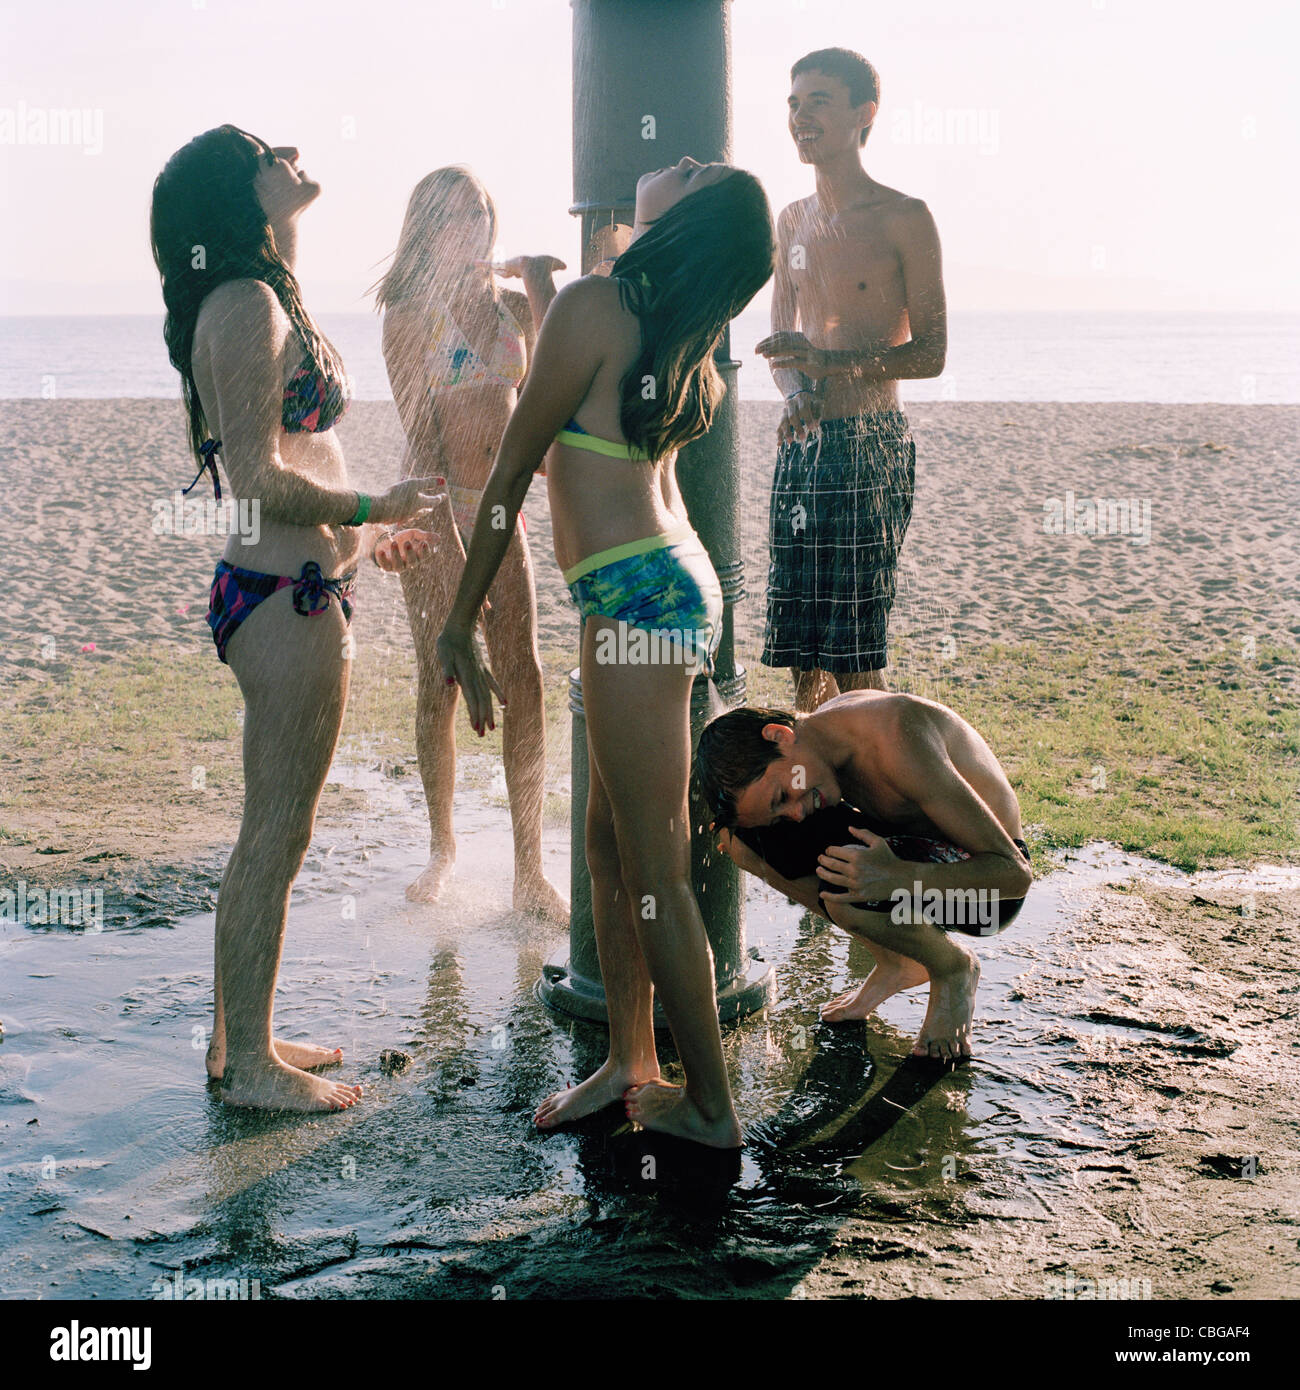 Naked Teens On Beach